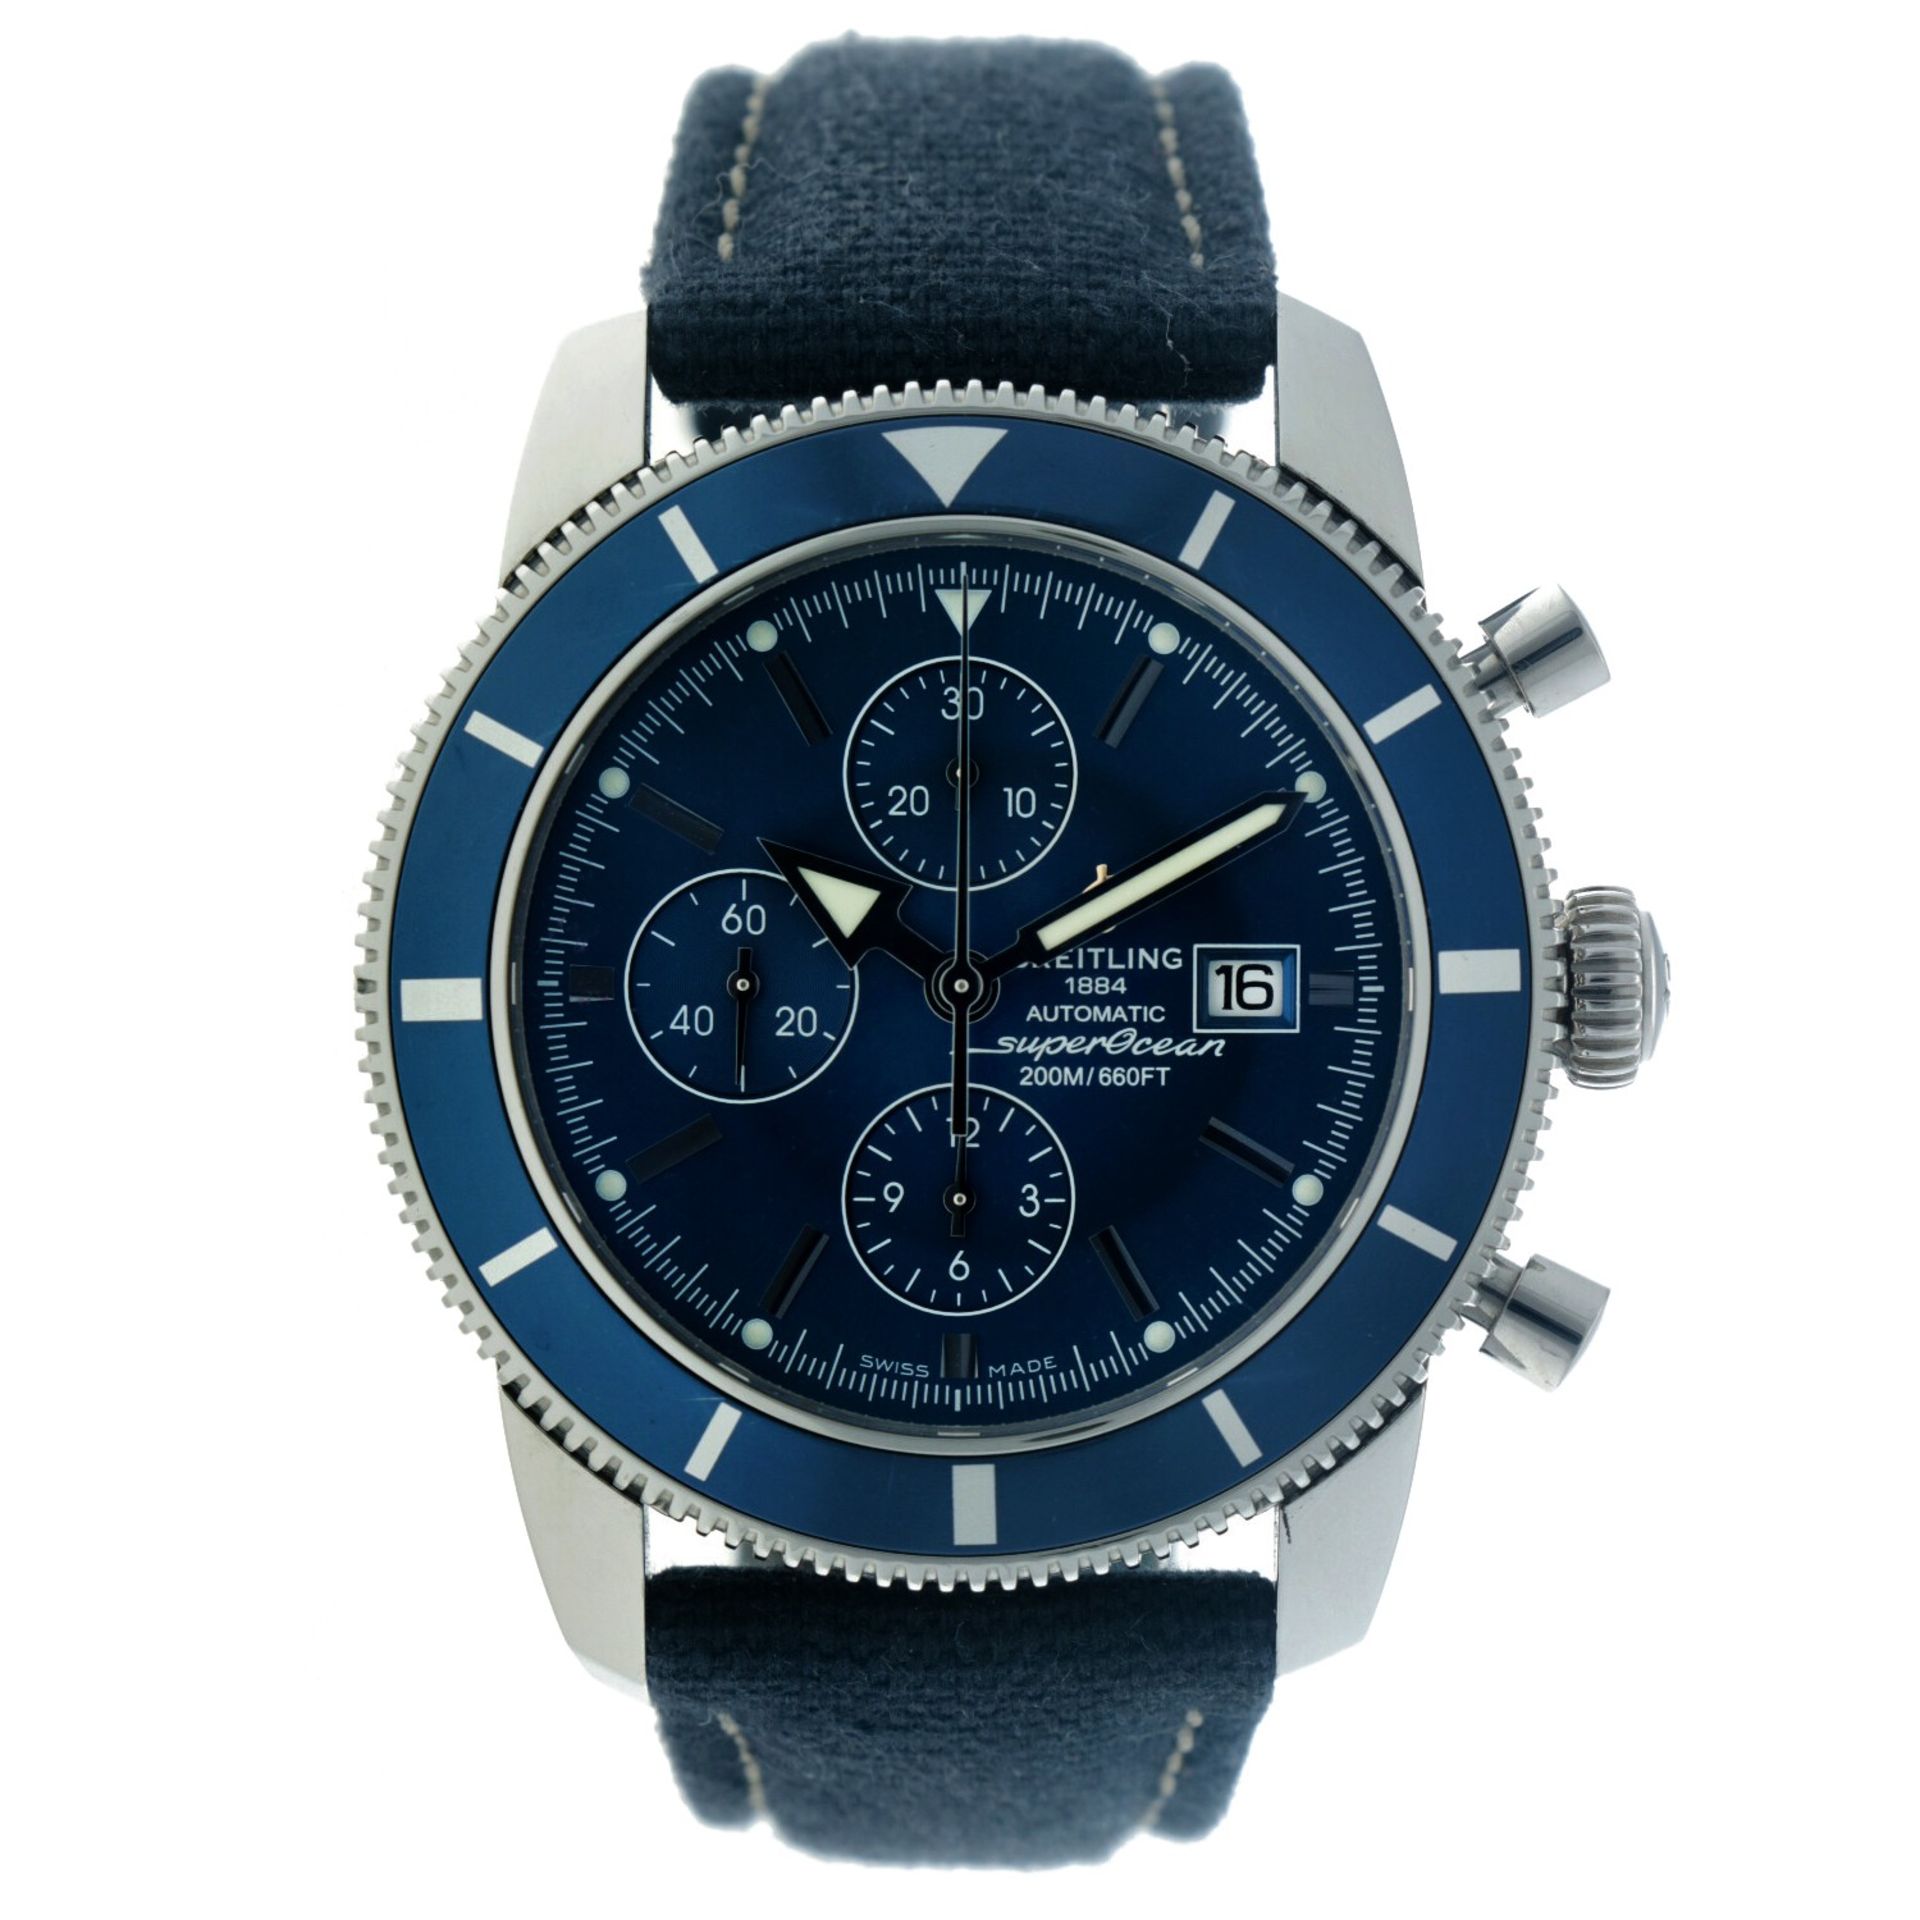 Breitling Superocean A13320 - Men's watch.